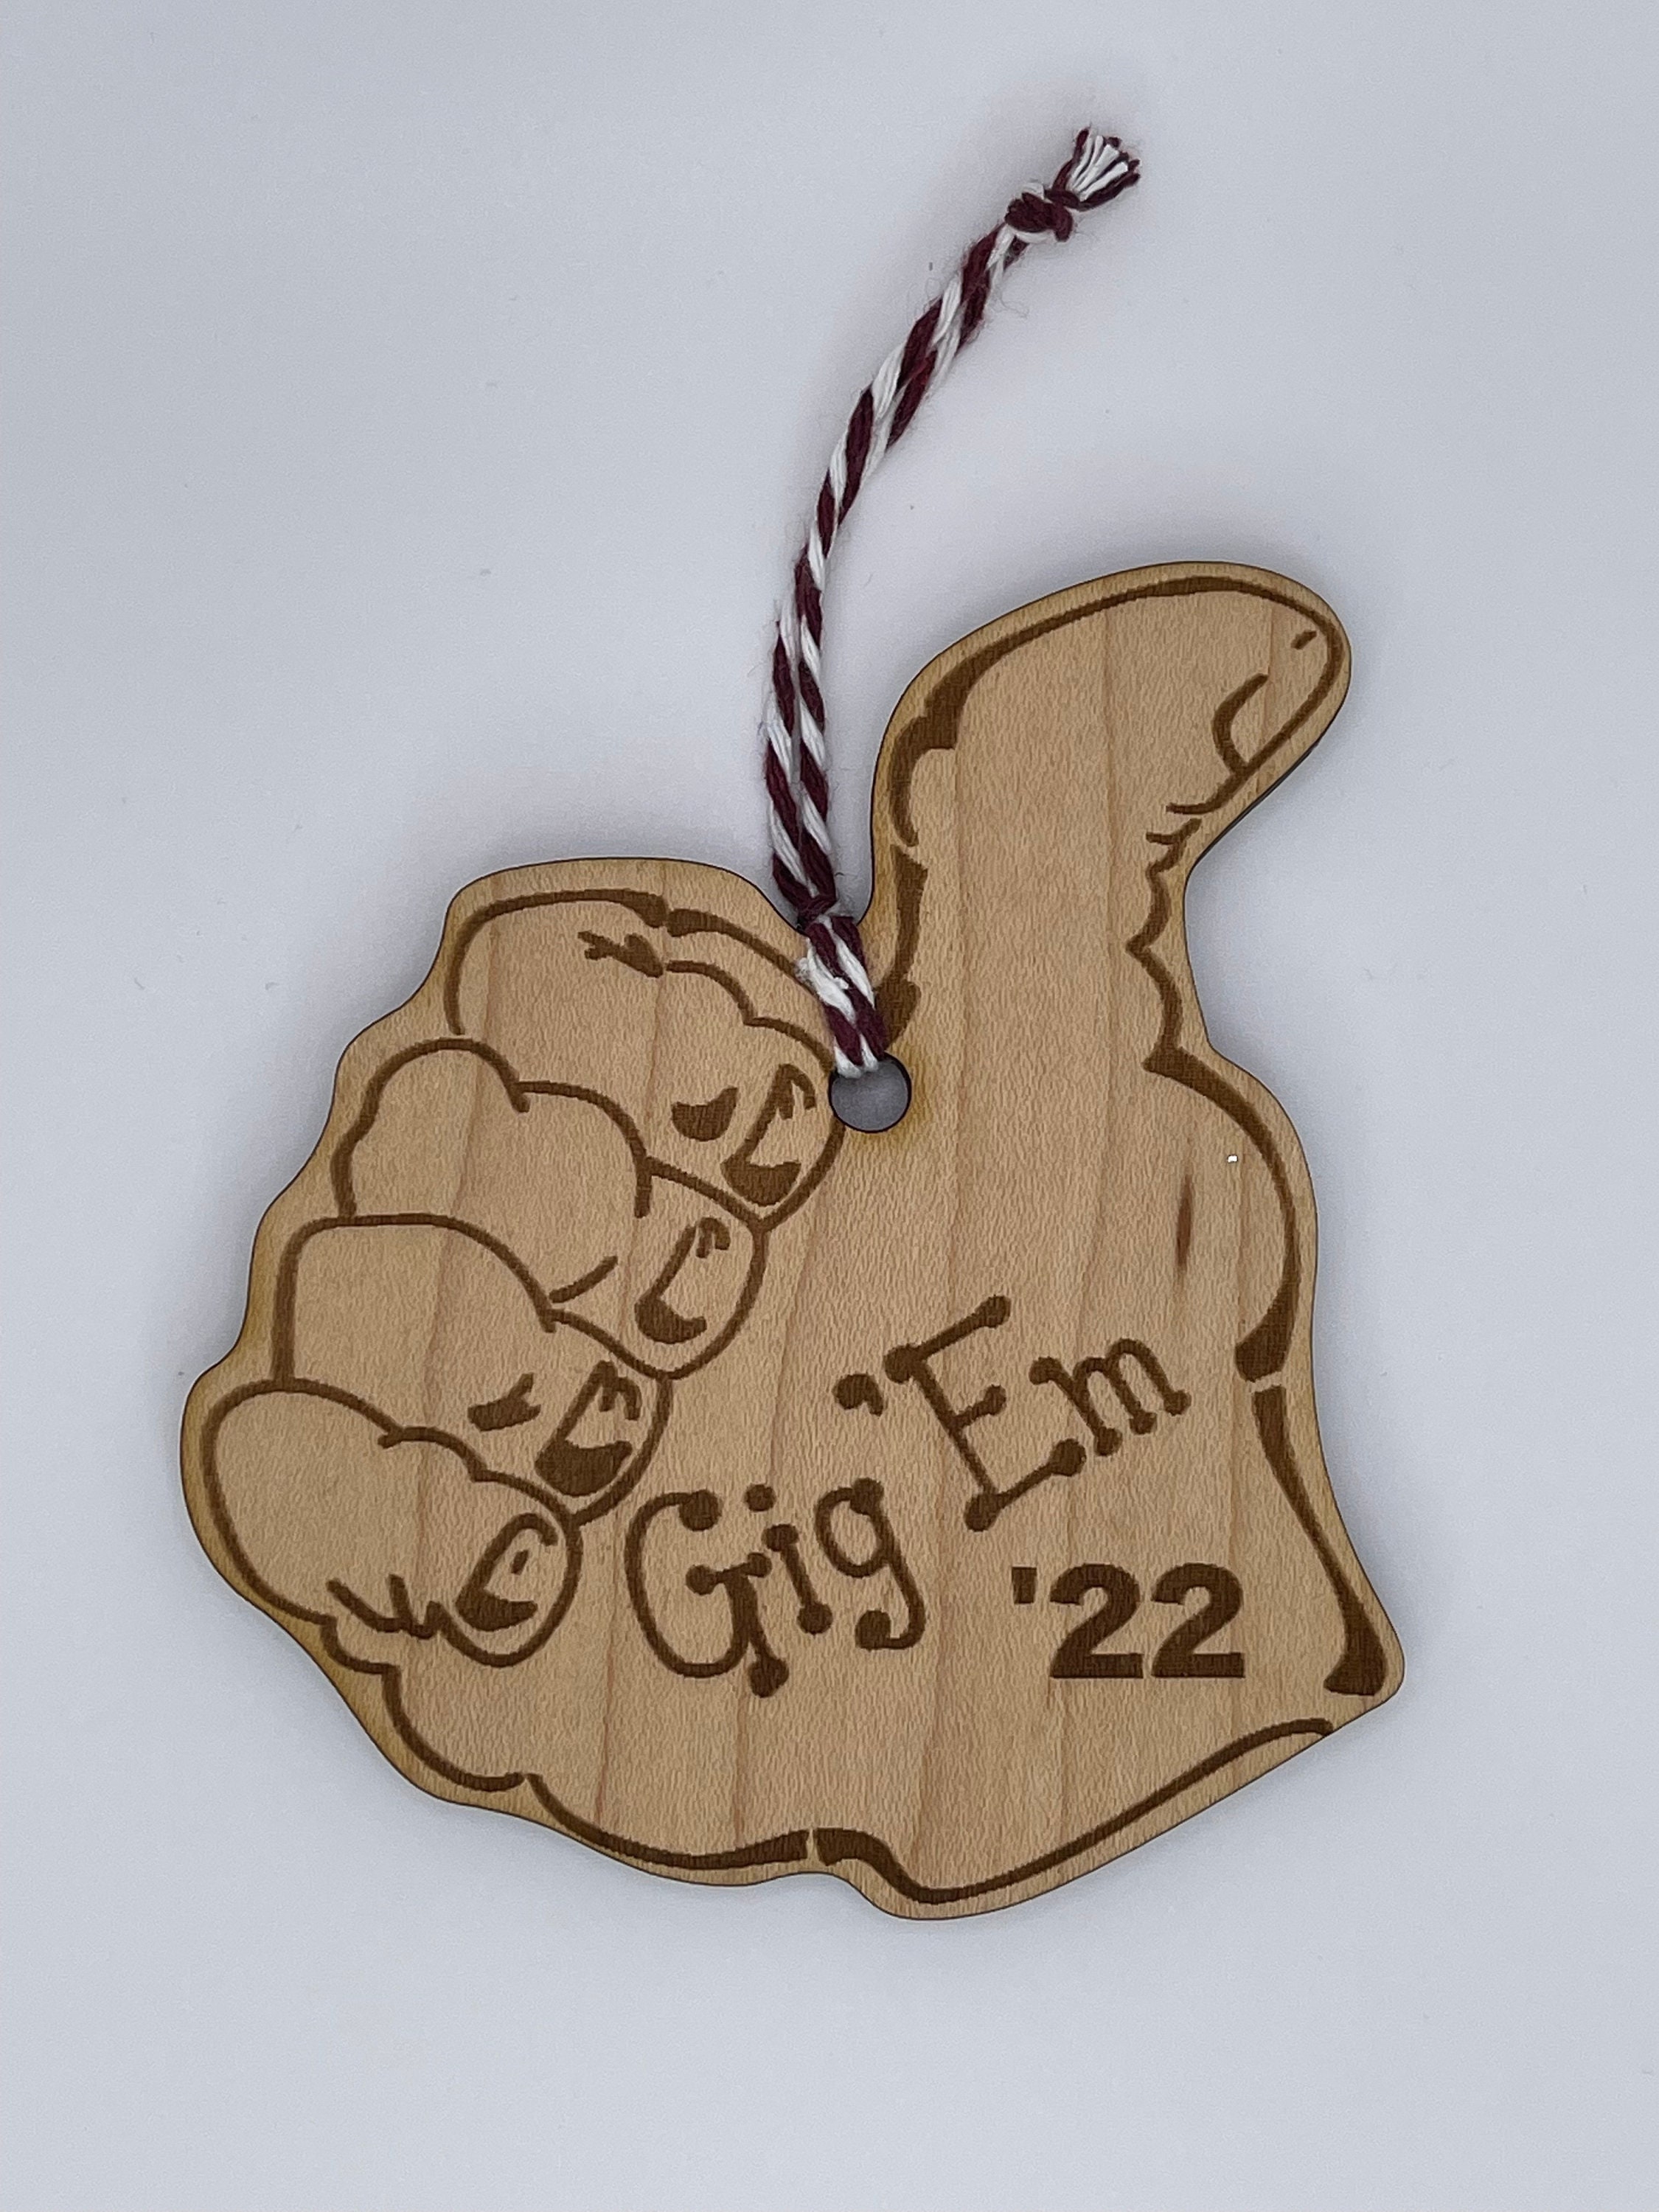 Gig'em Thumb W/class Year Wooden Ornament-aggie -  Israel